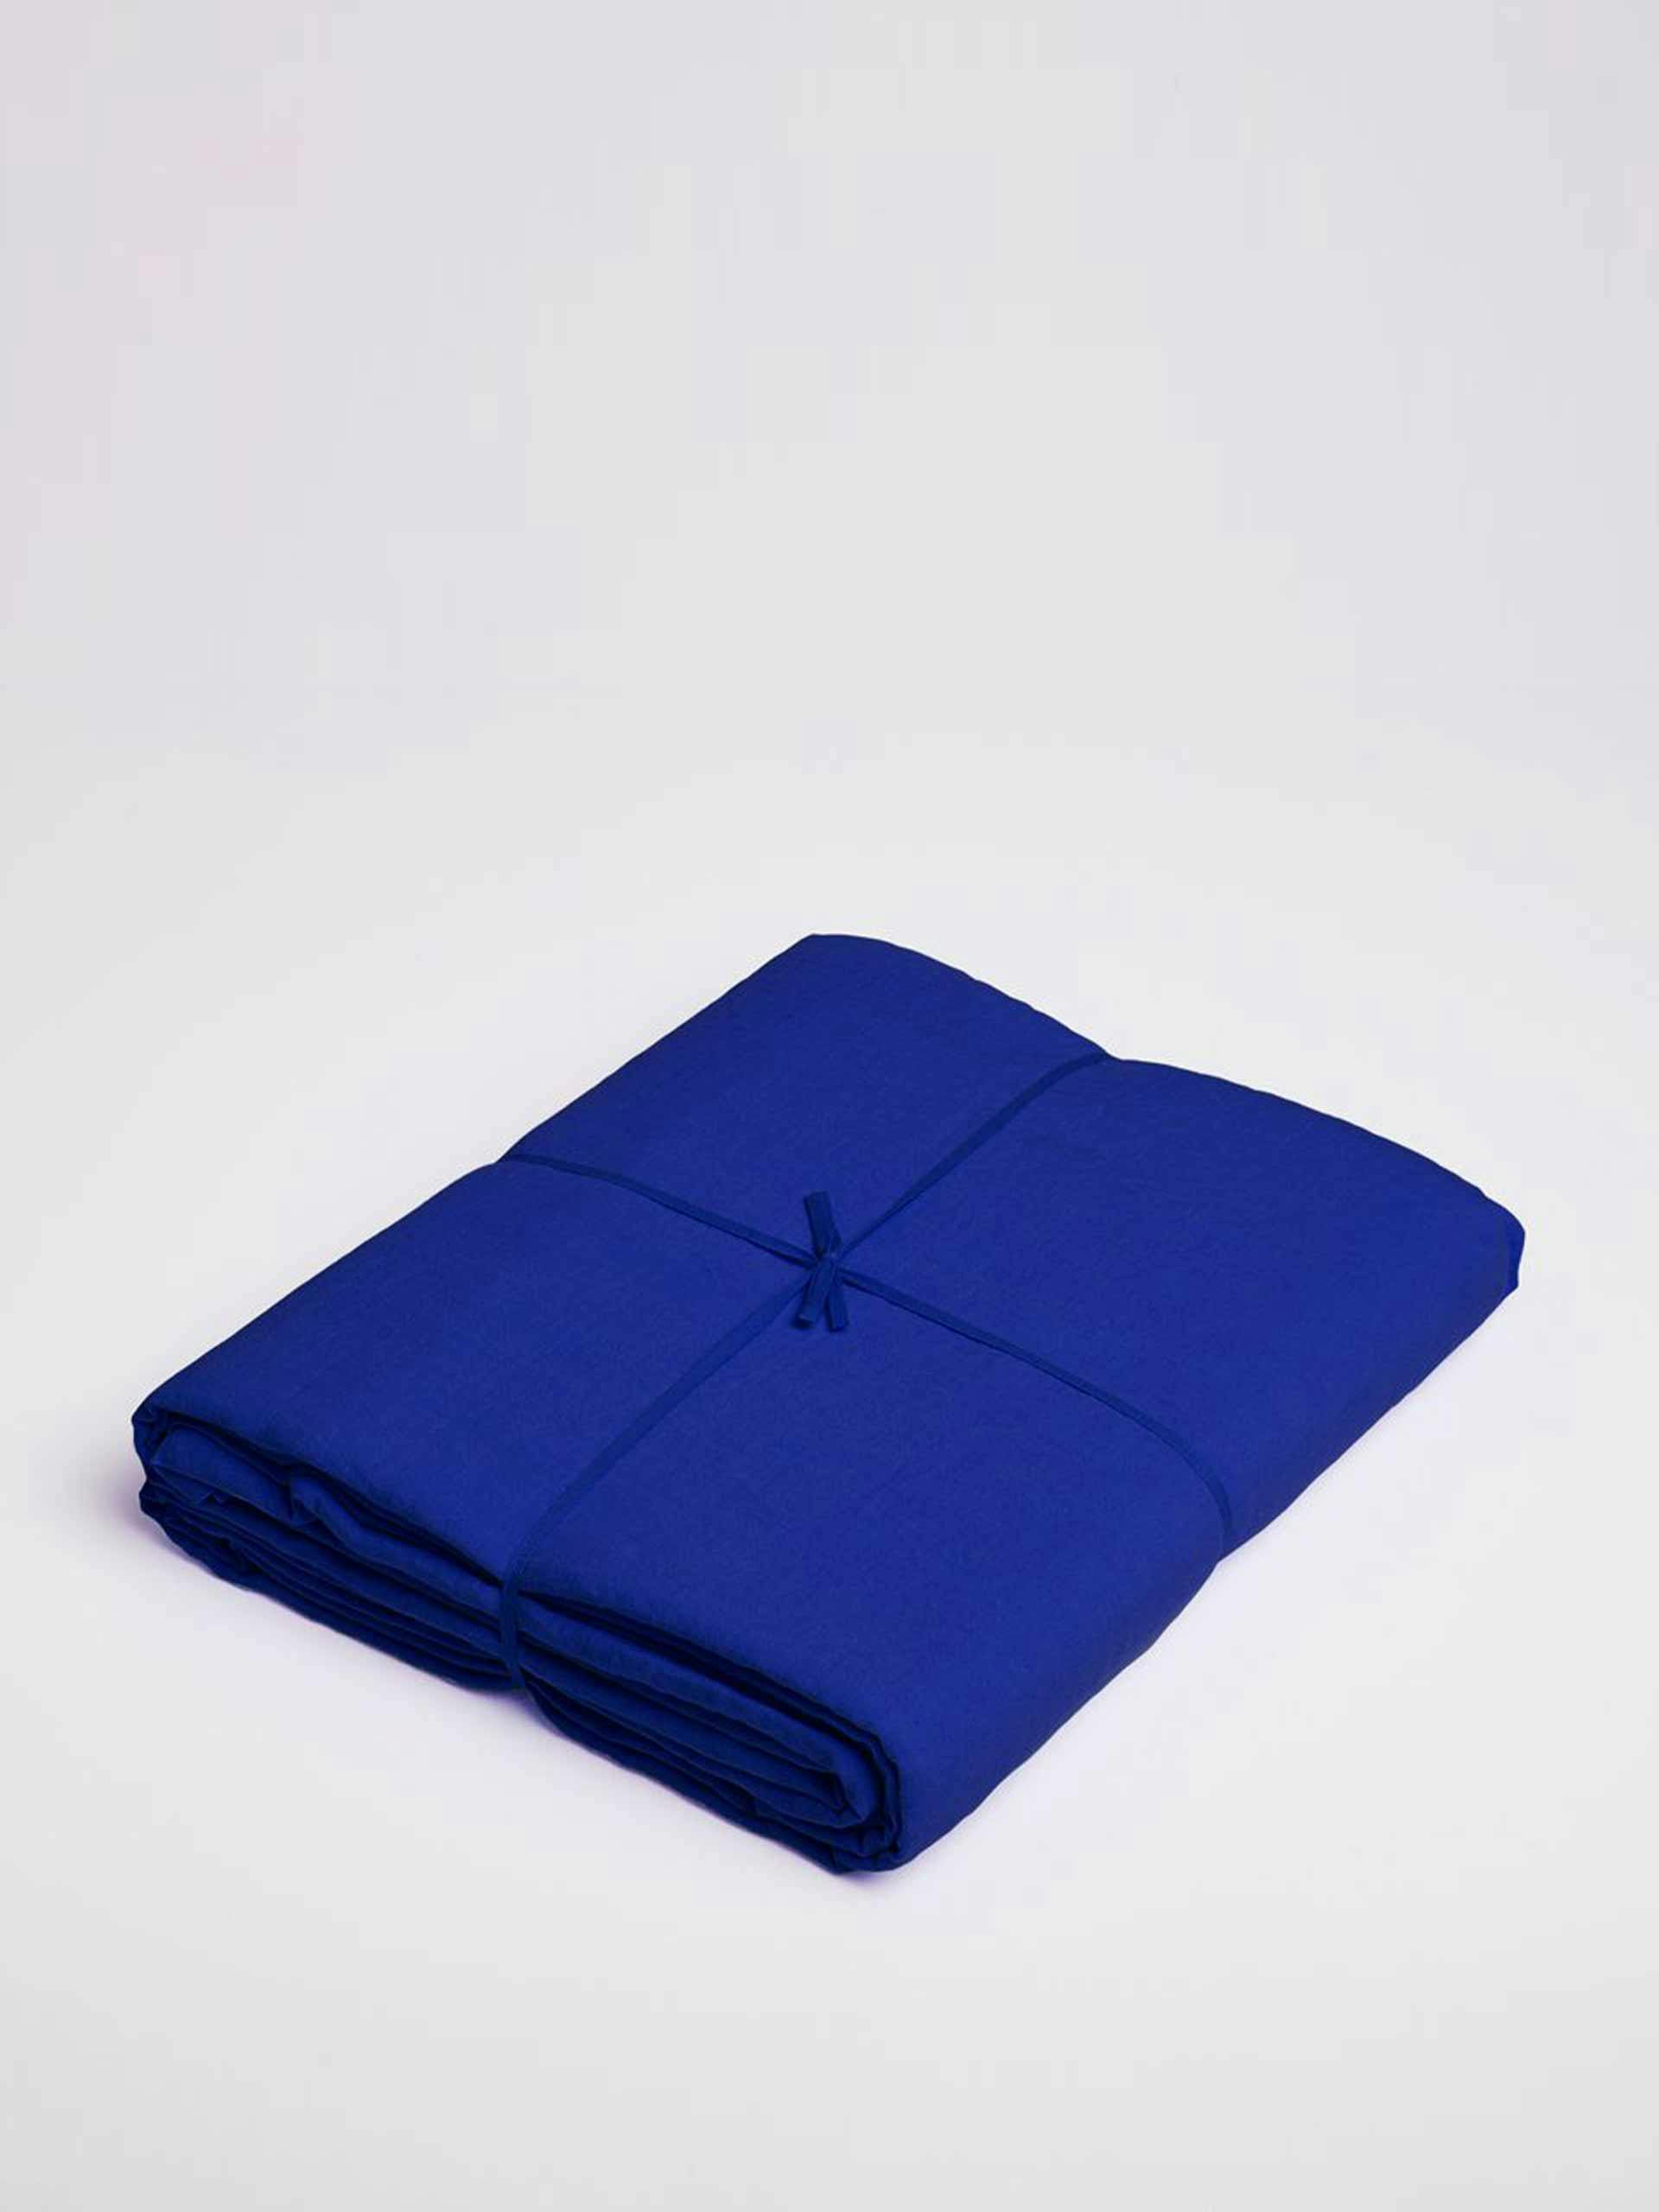 Blue bed linen bedding